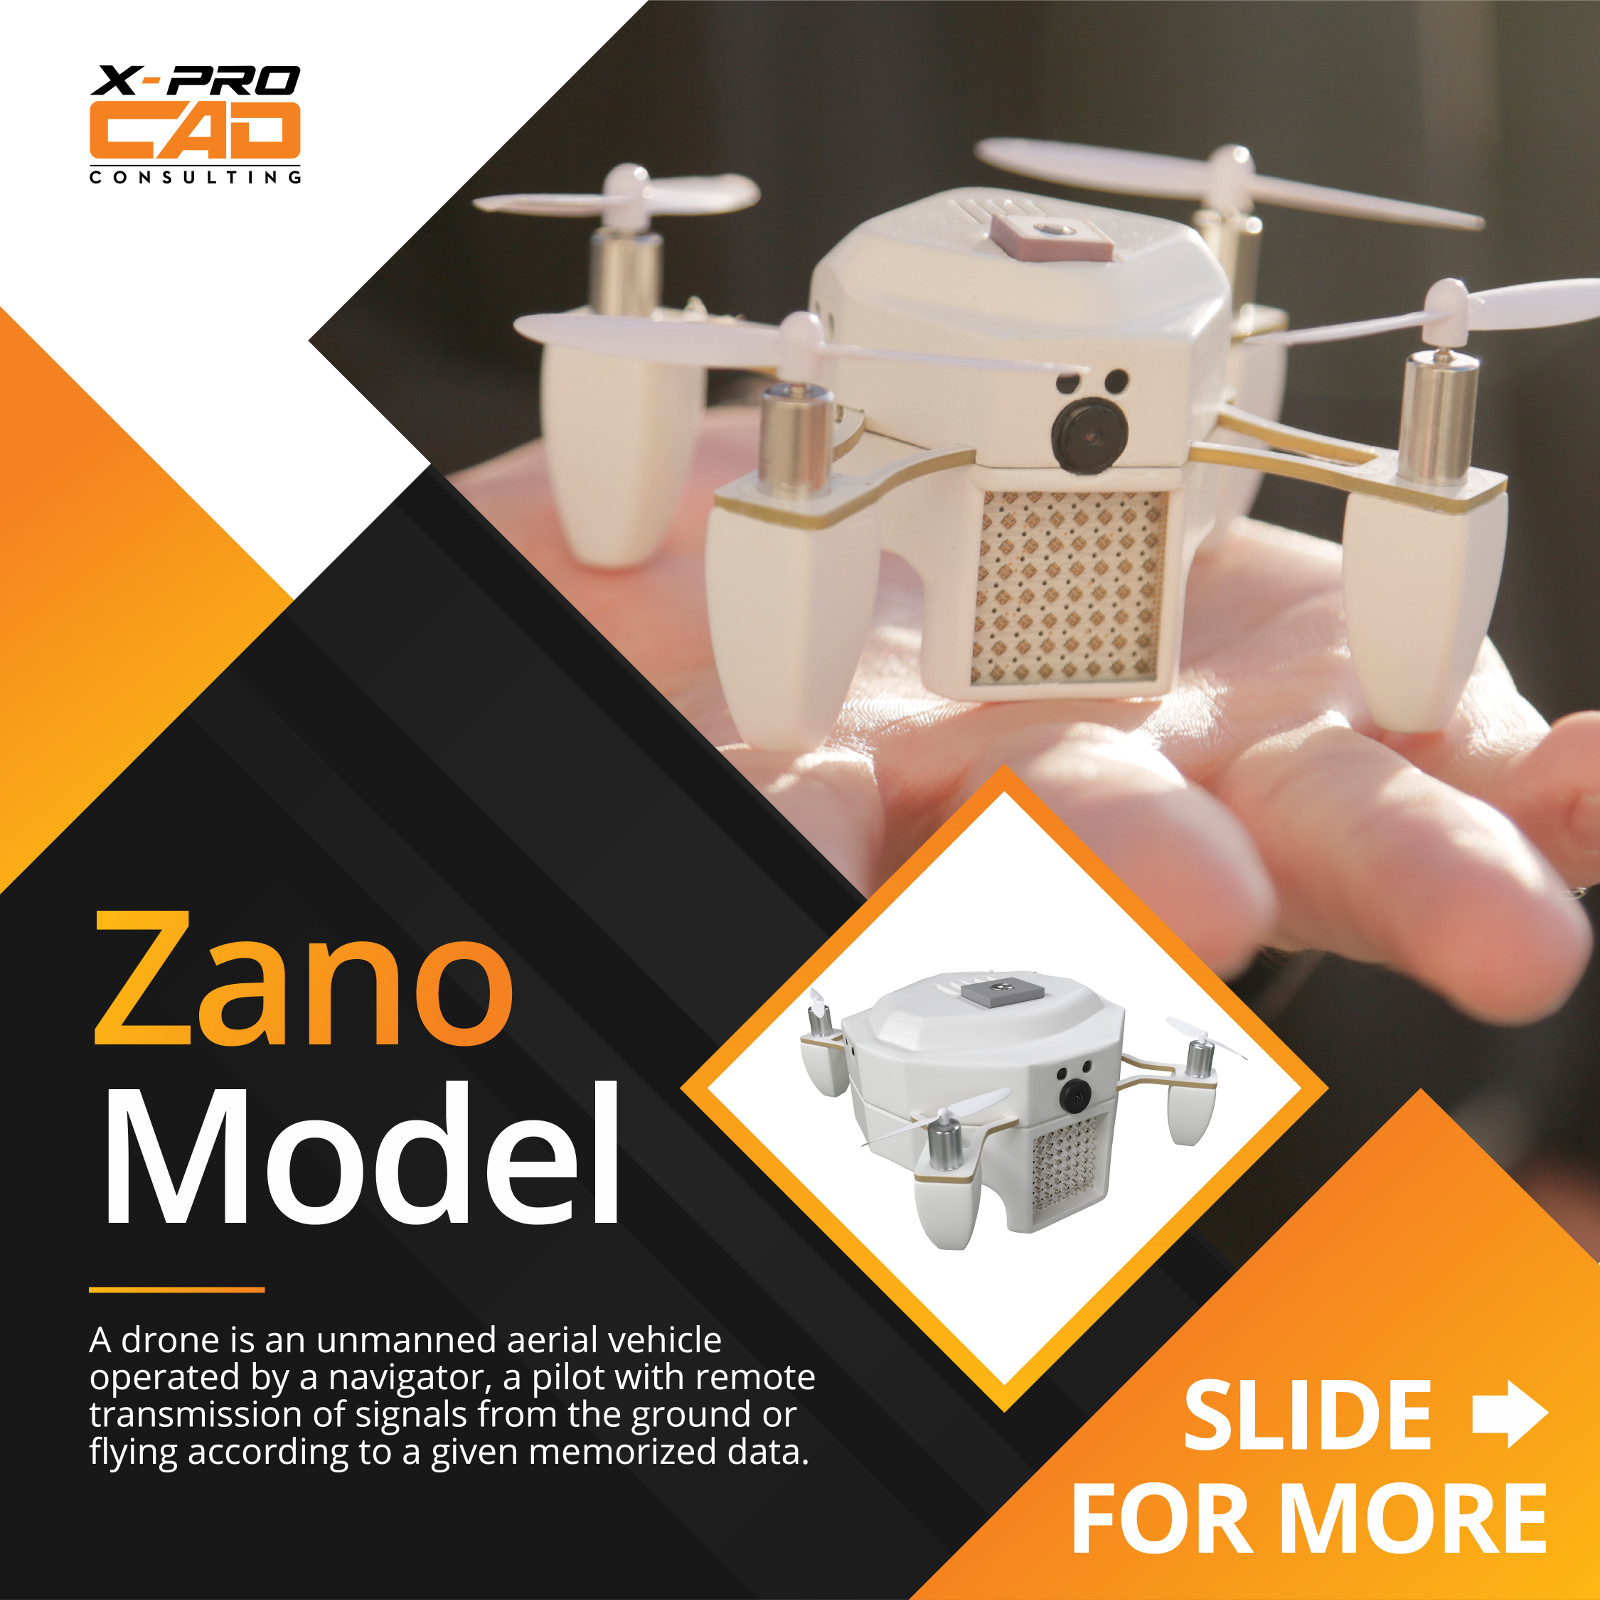 Zano Model